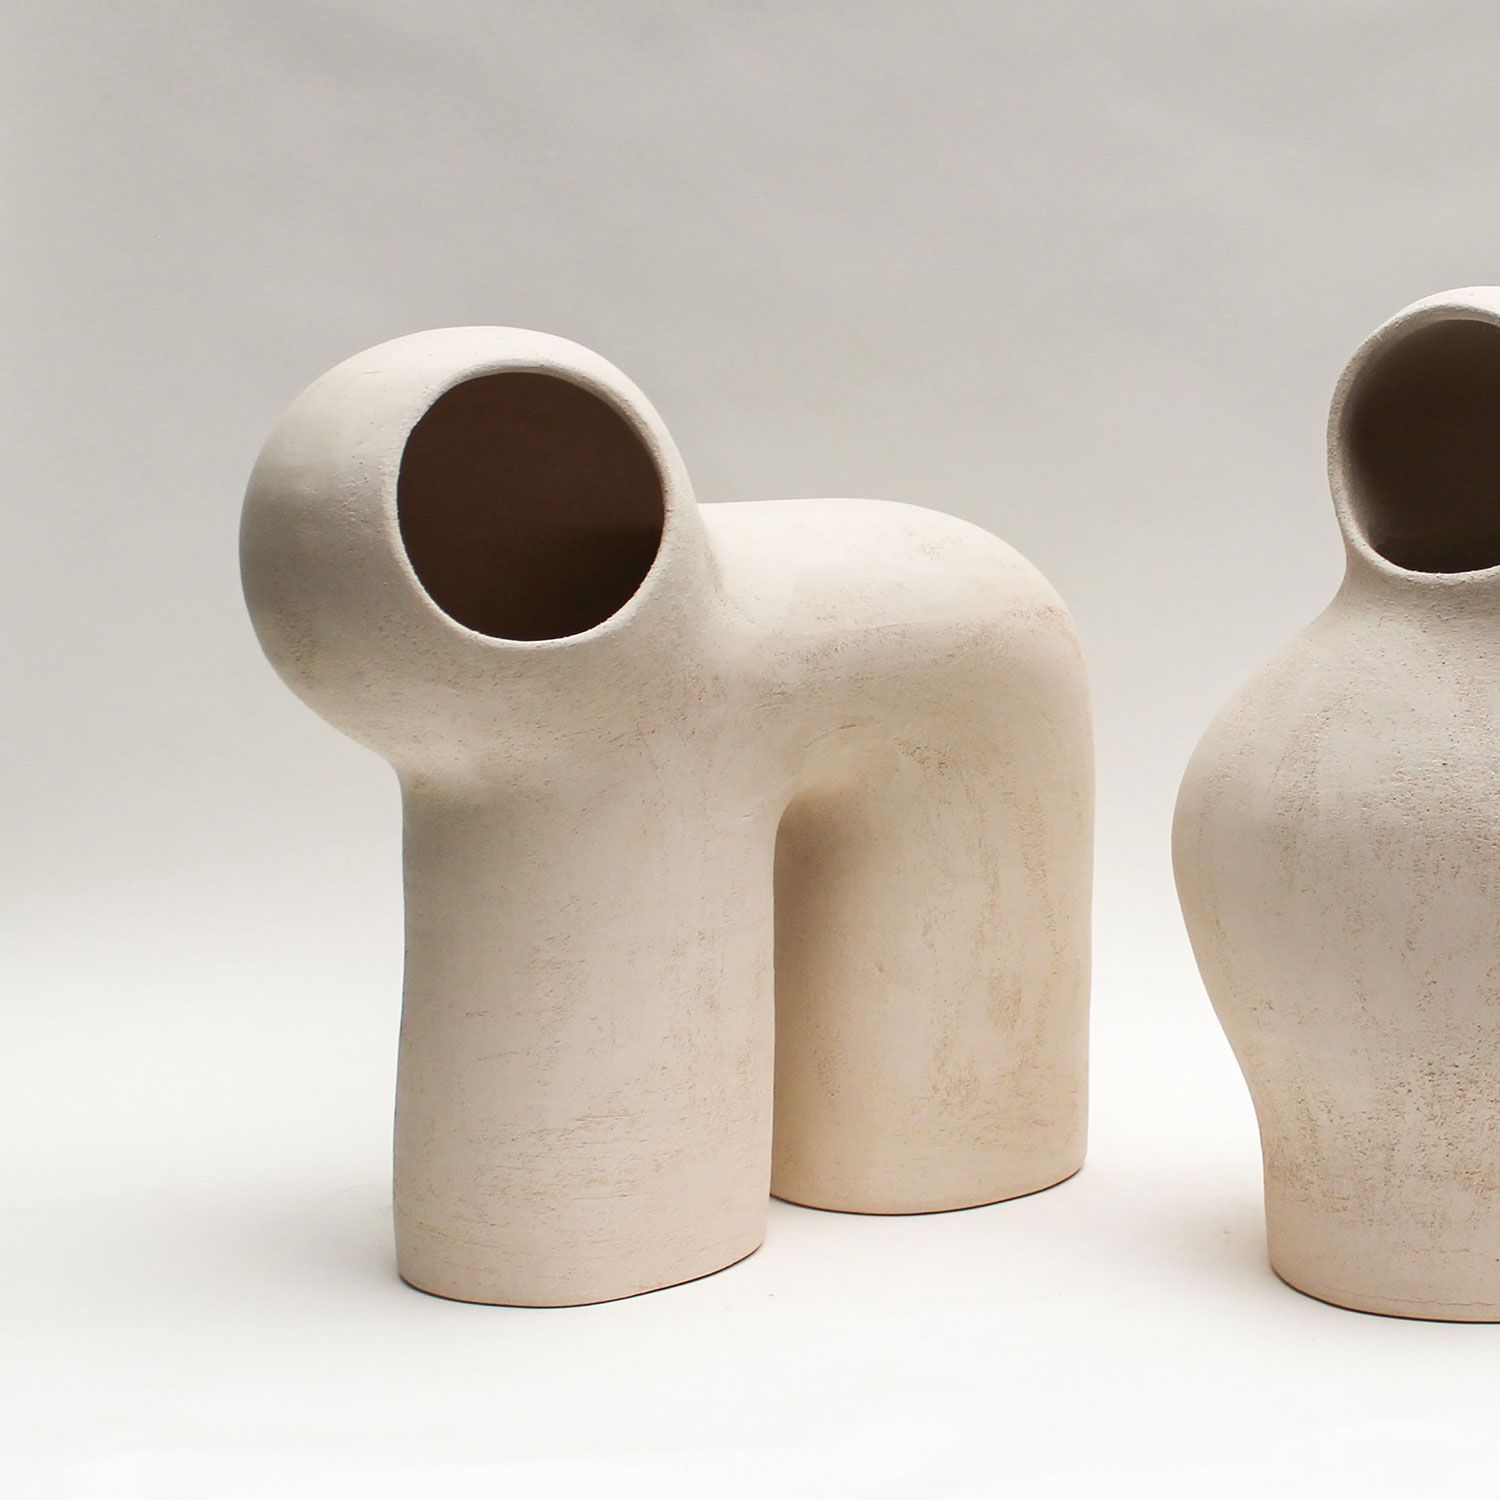 elisa-ubertis-ceramics-evoke-the-nurturing-spirit-of-cocoons